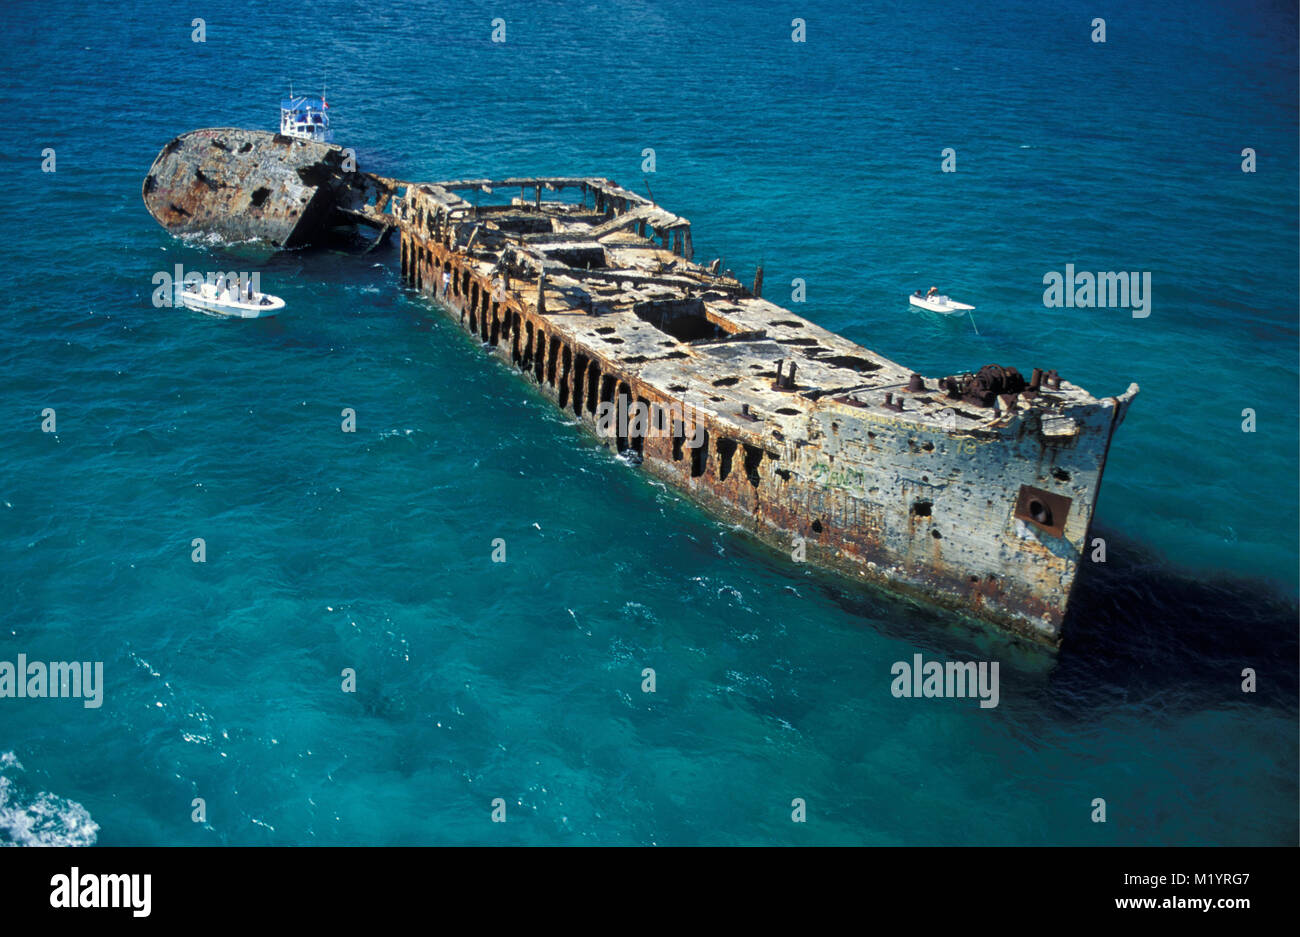 The Bahamas. Bimini Islands. Caribbean island. Ship wreck. Aerial. Stock Photo